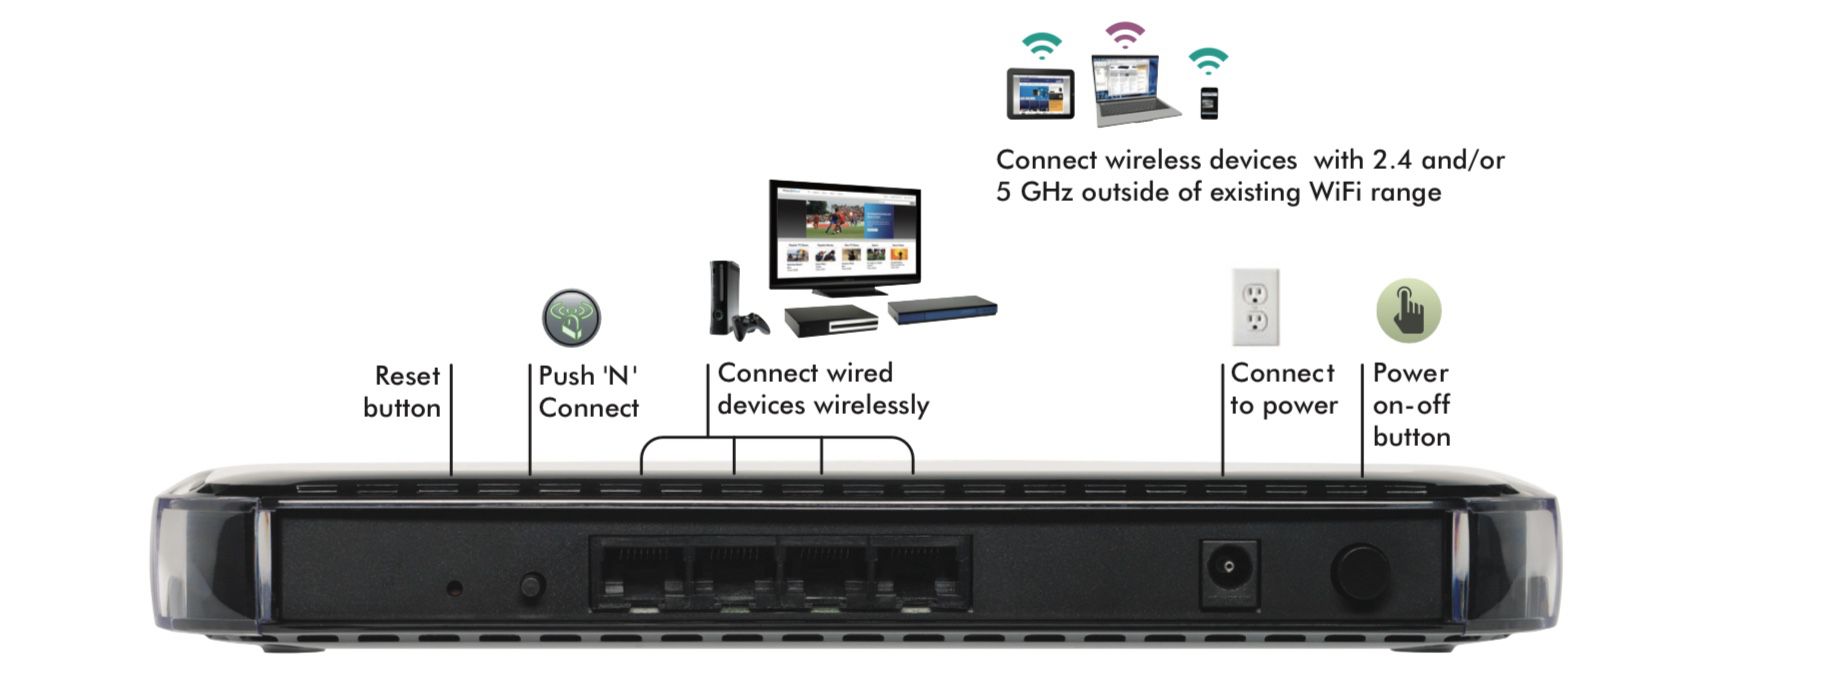 WN2500RP – Universal Dual Band WiFi Range Extender